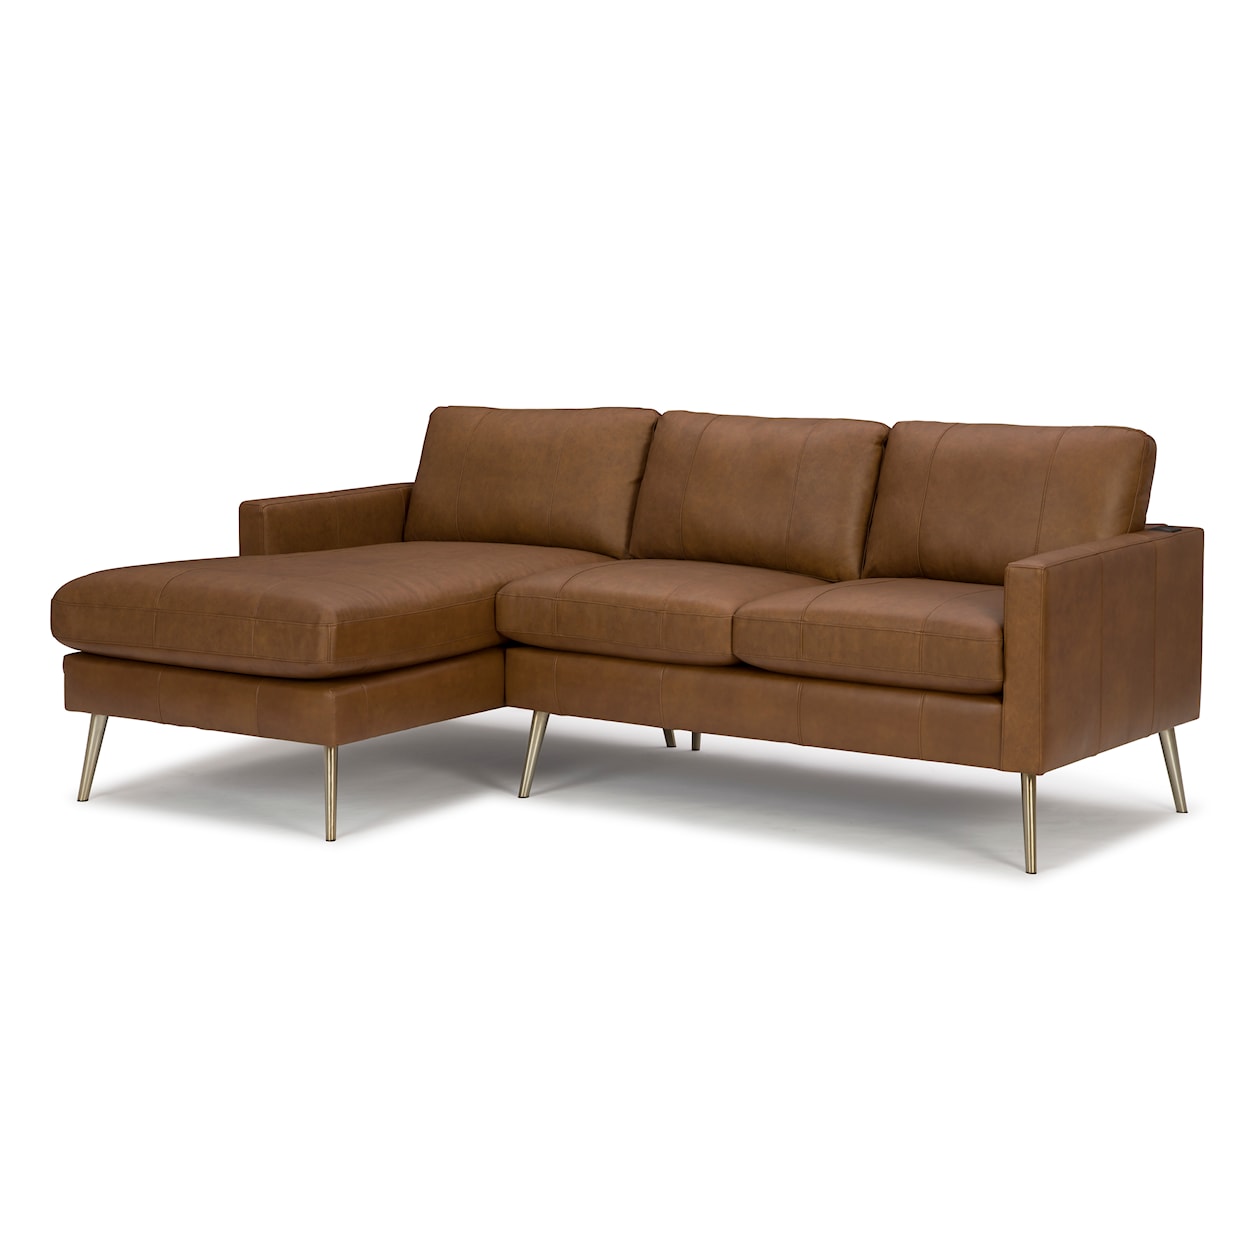 Best Home Furnishings Trafton Leather Chaise Sofa w/ USB Port & Metal Feet